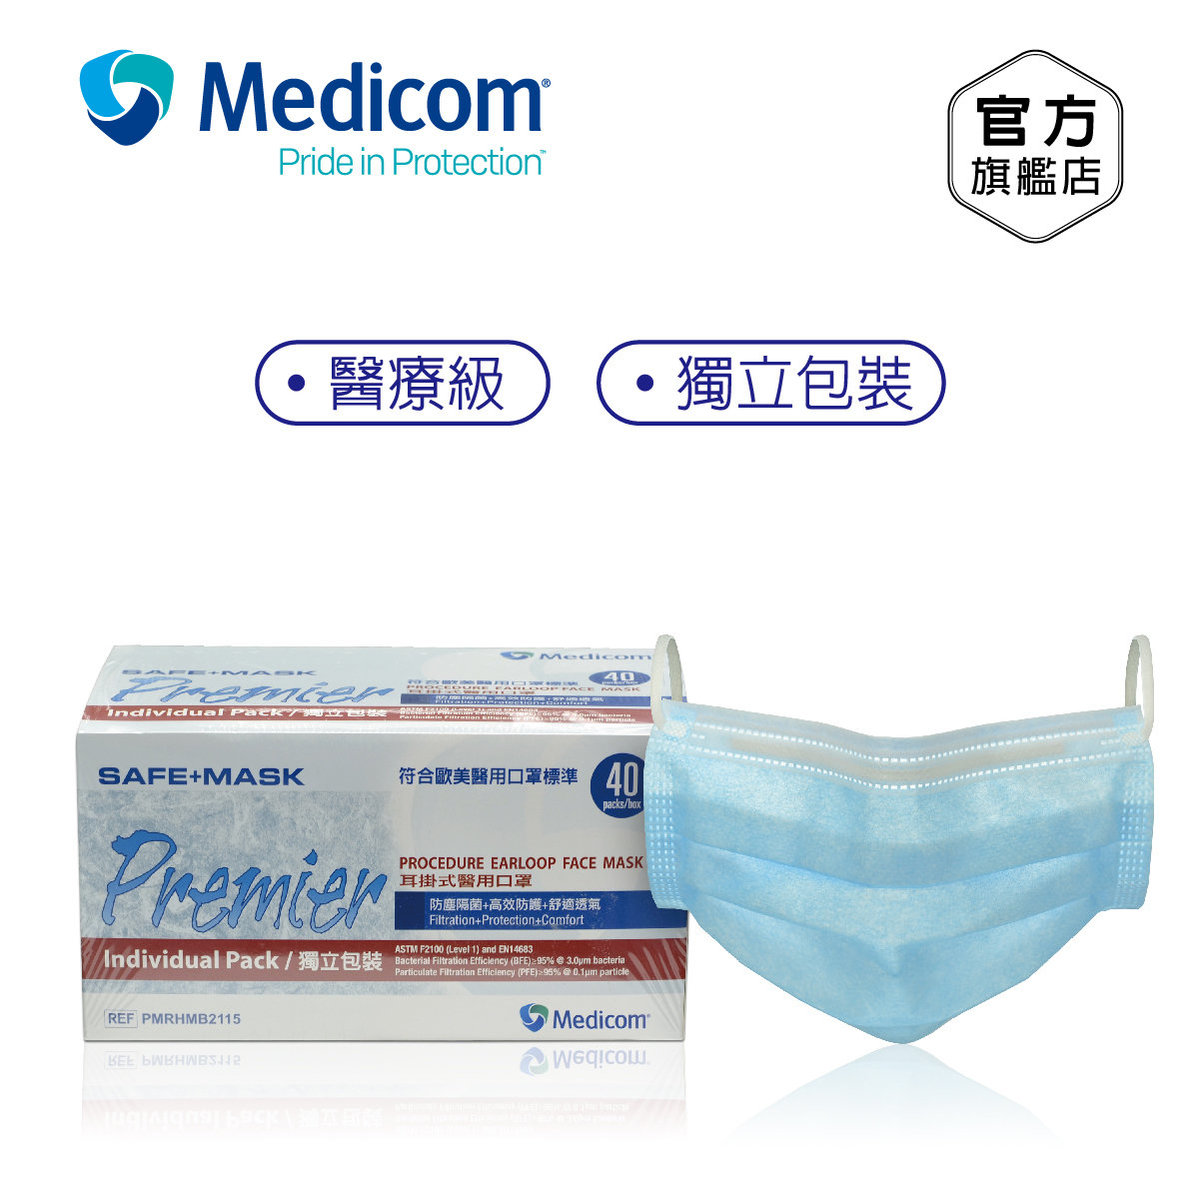 Safe+Mask Premier 醫用成人口罩獨立包裝 - 藍色 40片/盒 #PMRHMB2115